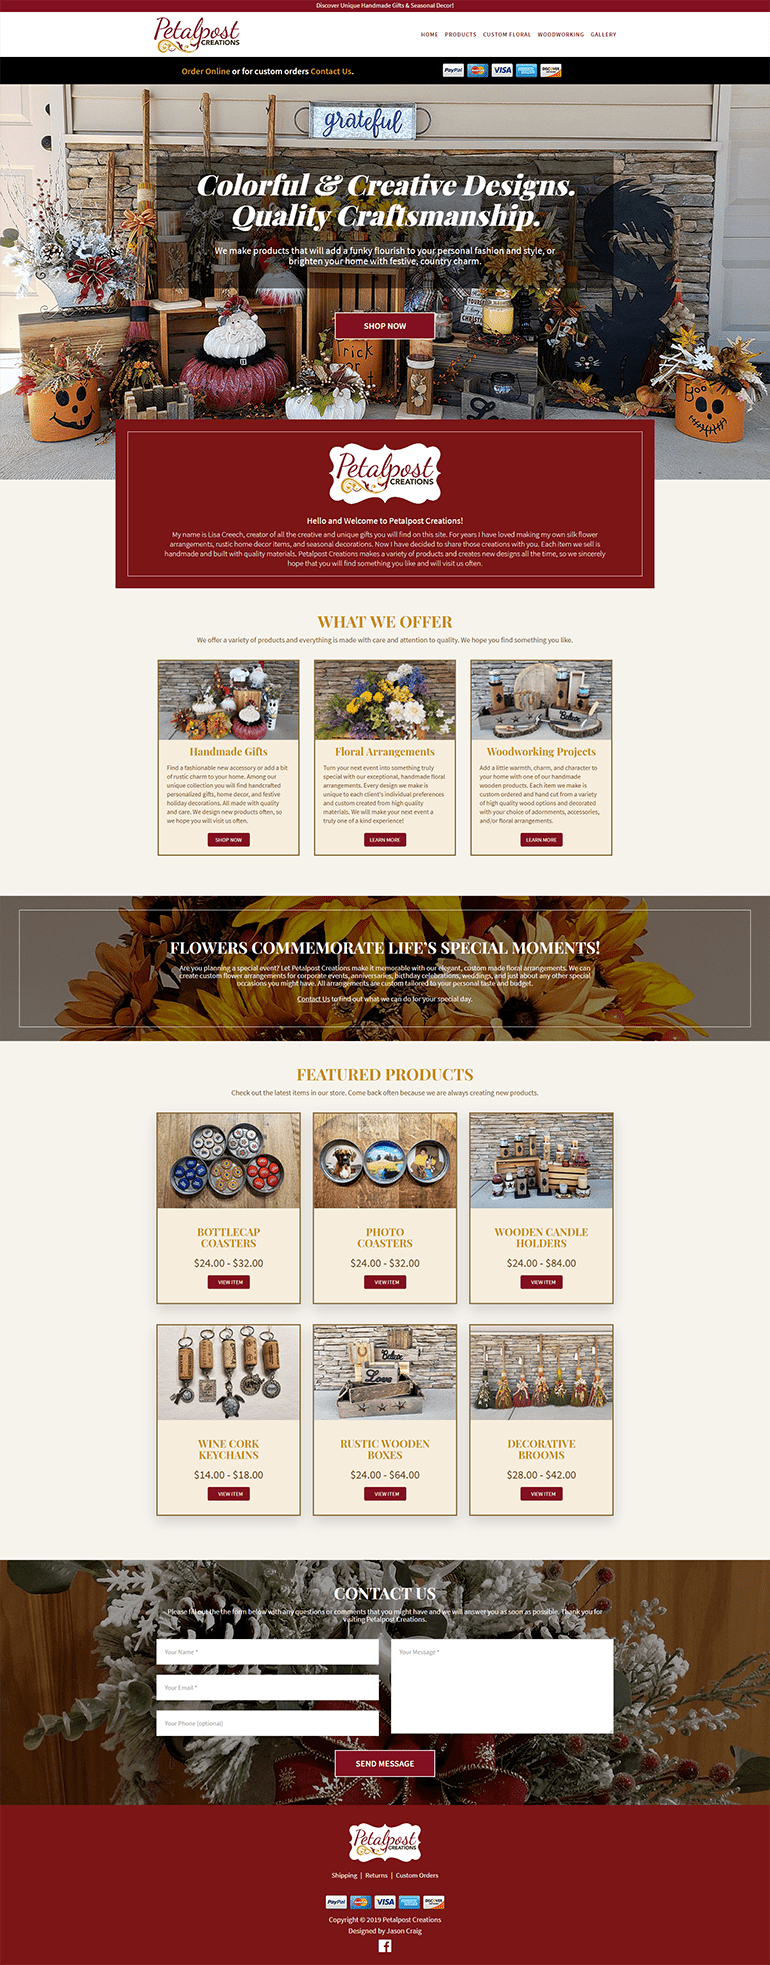 Petalpost Creations website homepage layout.